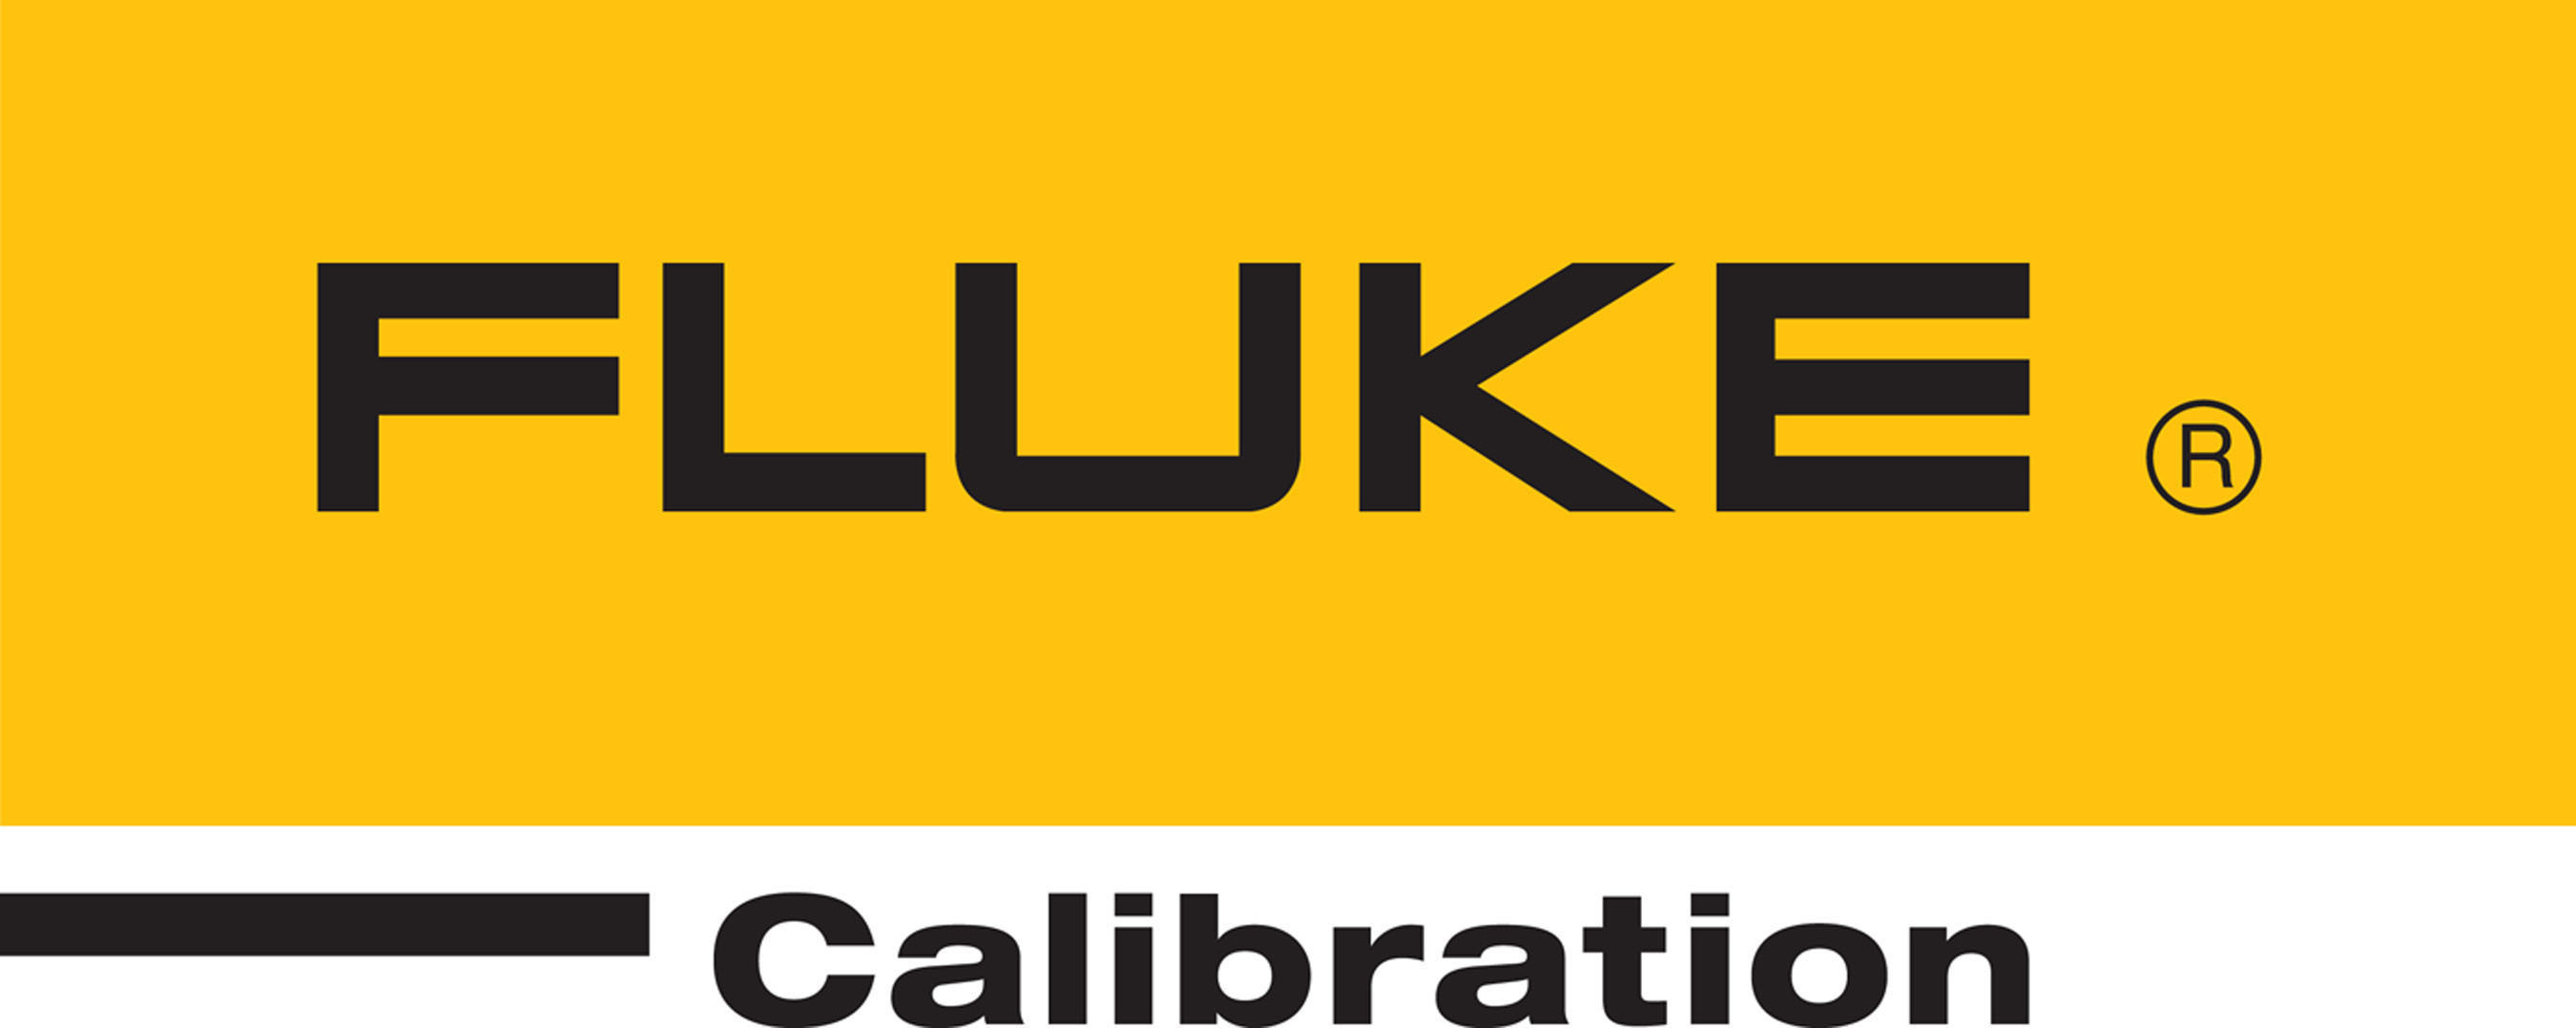 Fluke Calibration. (PRNewsFoto/Fluke Corporation) (PRNewsFoto/)